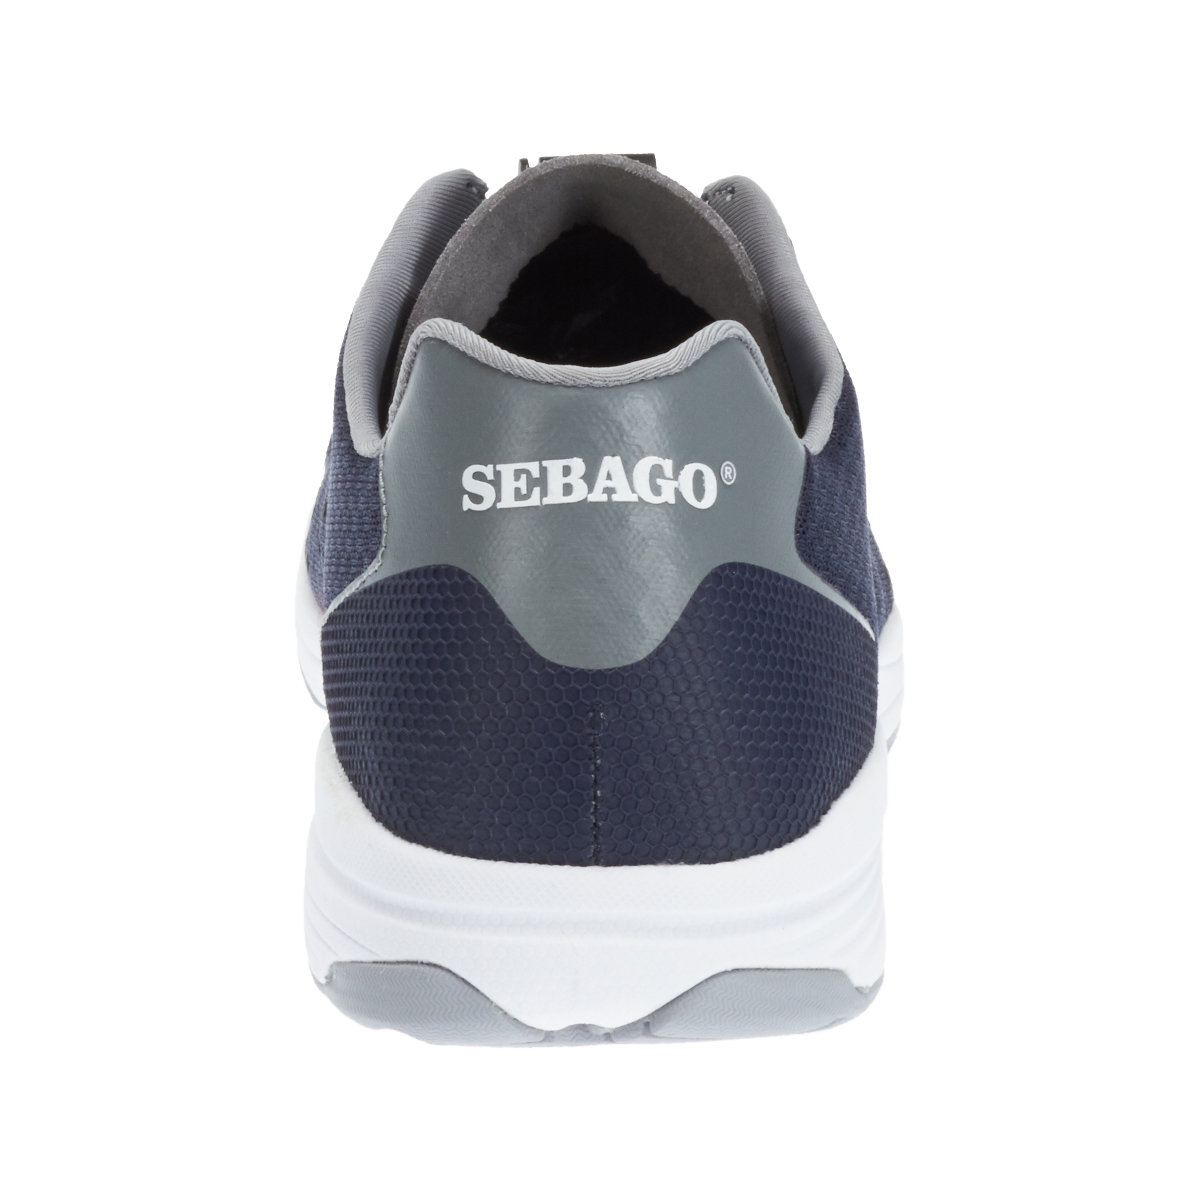 Sebago Cyphon Sea Sport chaussures à voile homme navy, taille EU 44 (US 10)